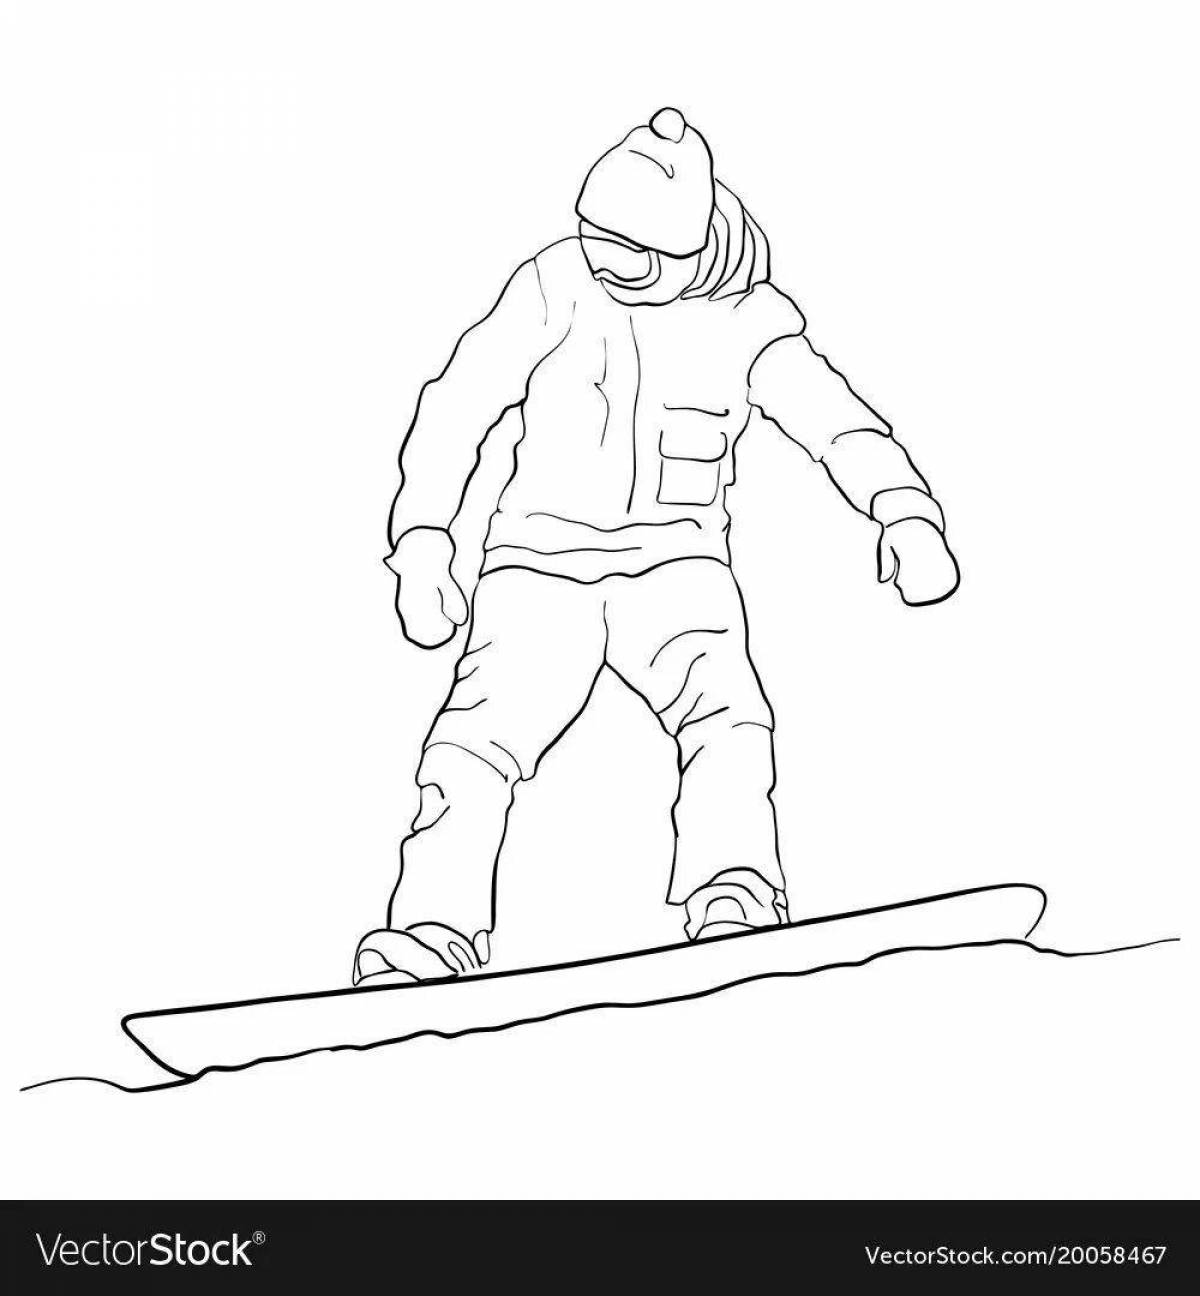 Coloring book of joyful snowboarder for children